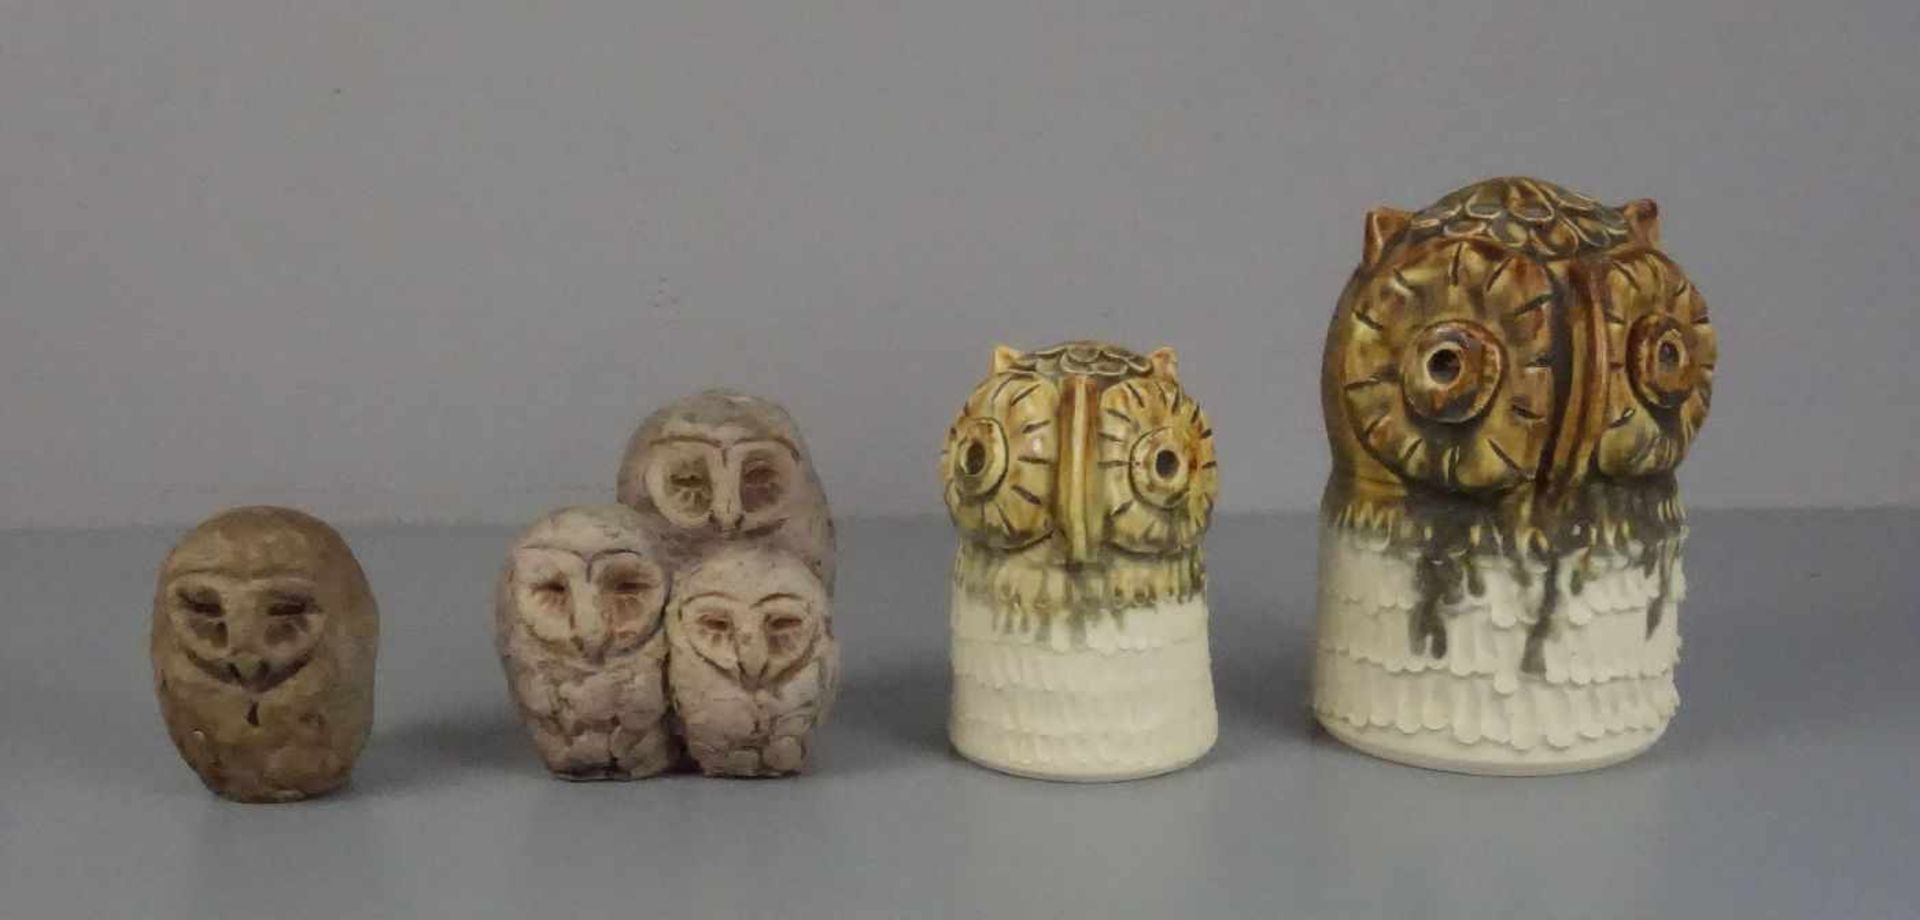 KONVOLUT STUDIOKERAMIK / KÜNSTLERKERAMIK / SKULPTUREN "Eulen" / pottery owls. 1-2) "Eulenfamilie"